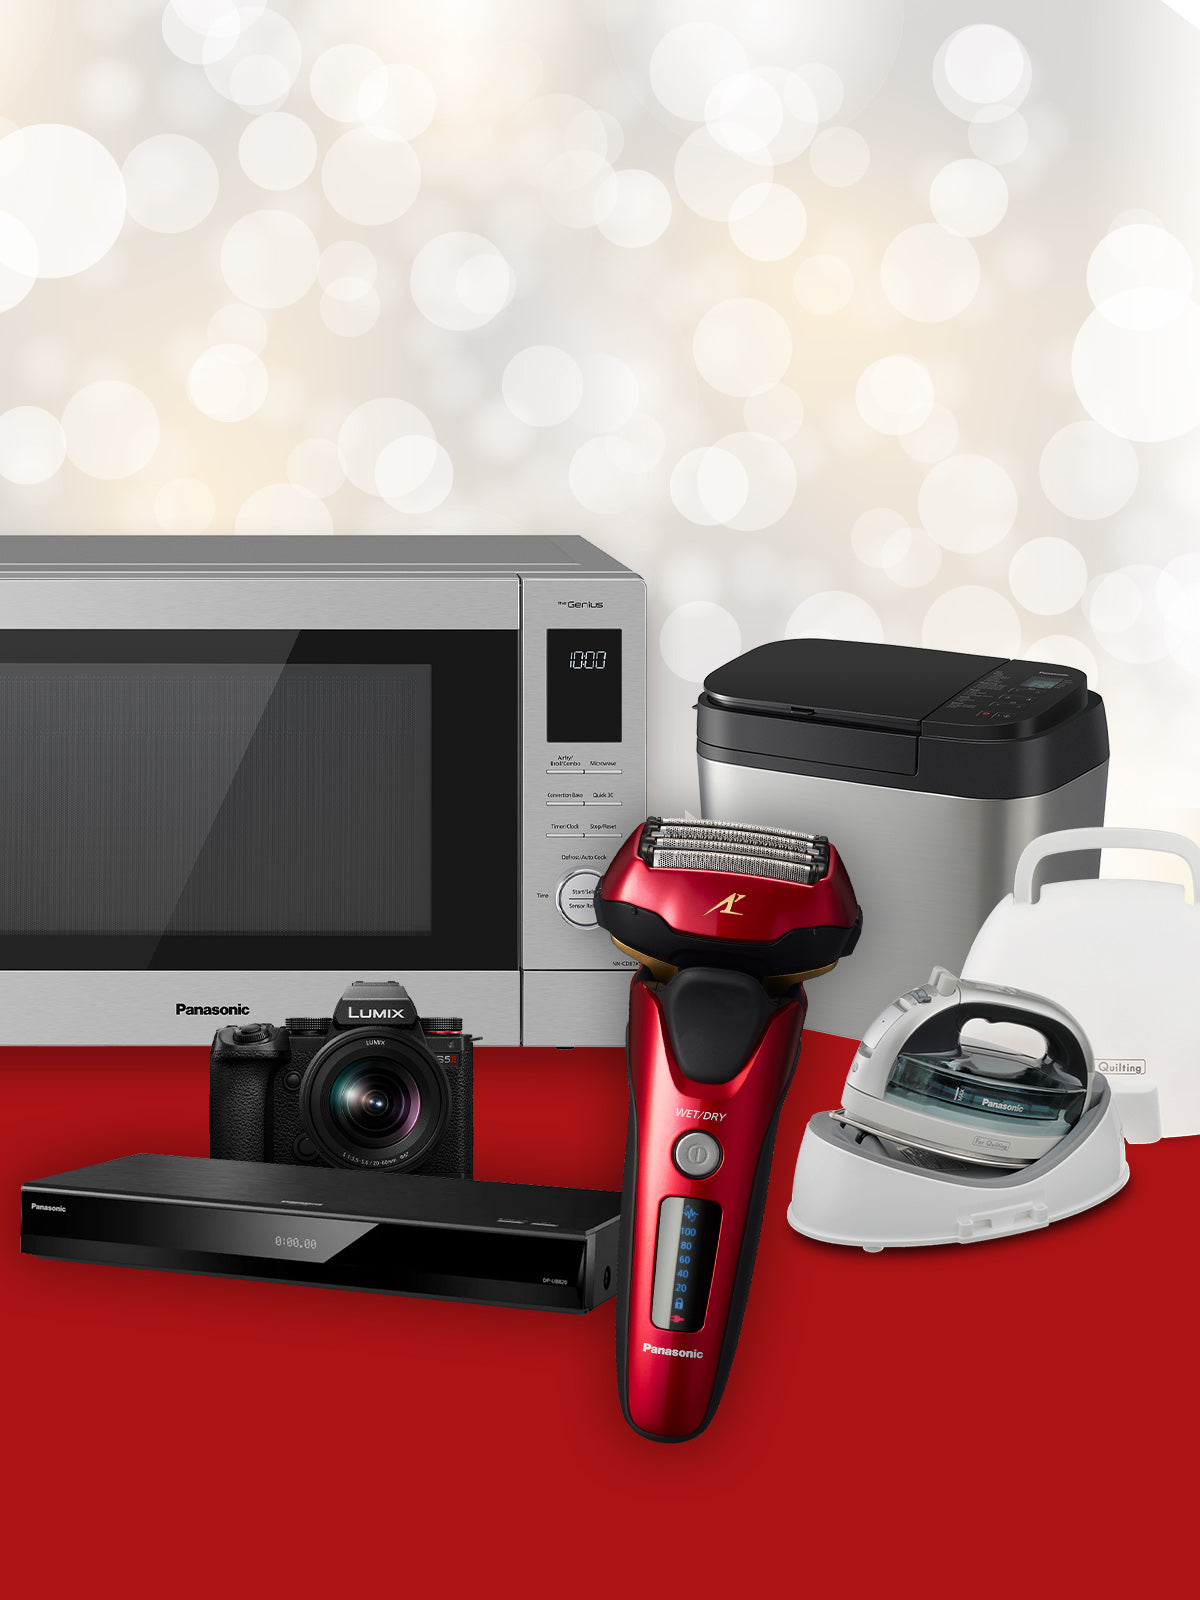 Gift Concept, Home Appliances Inside Gift Box. 3D Rendering Stock  Illustration - Illustration of shopping, device: 162980300